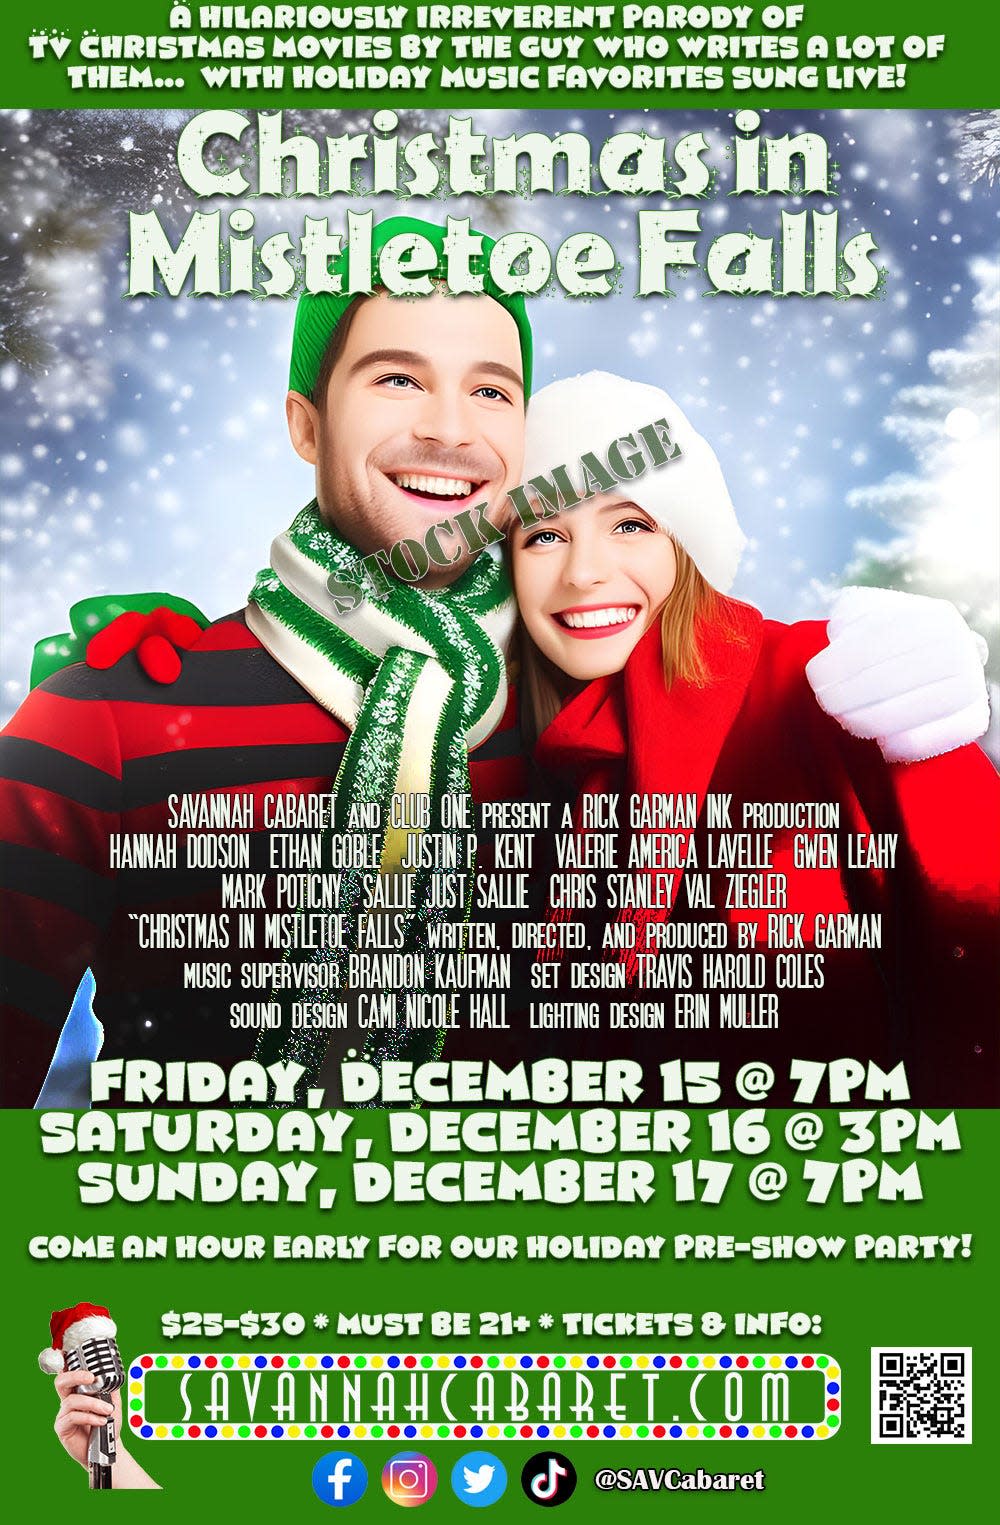 Savannah Cabaret's latest performance, "Christmas in Mistletoe Fall"